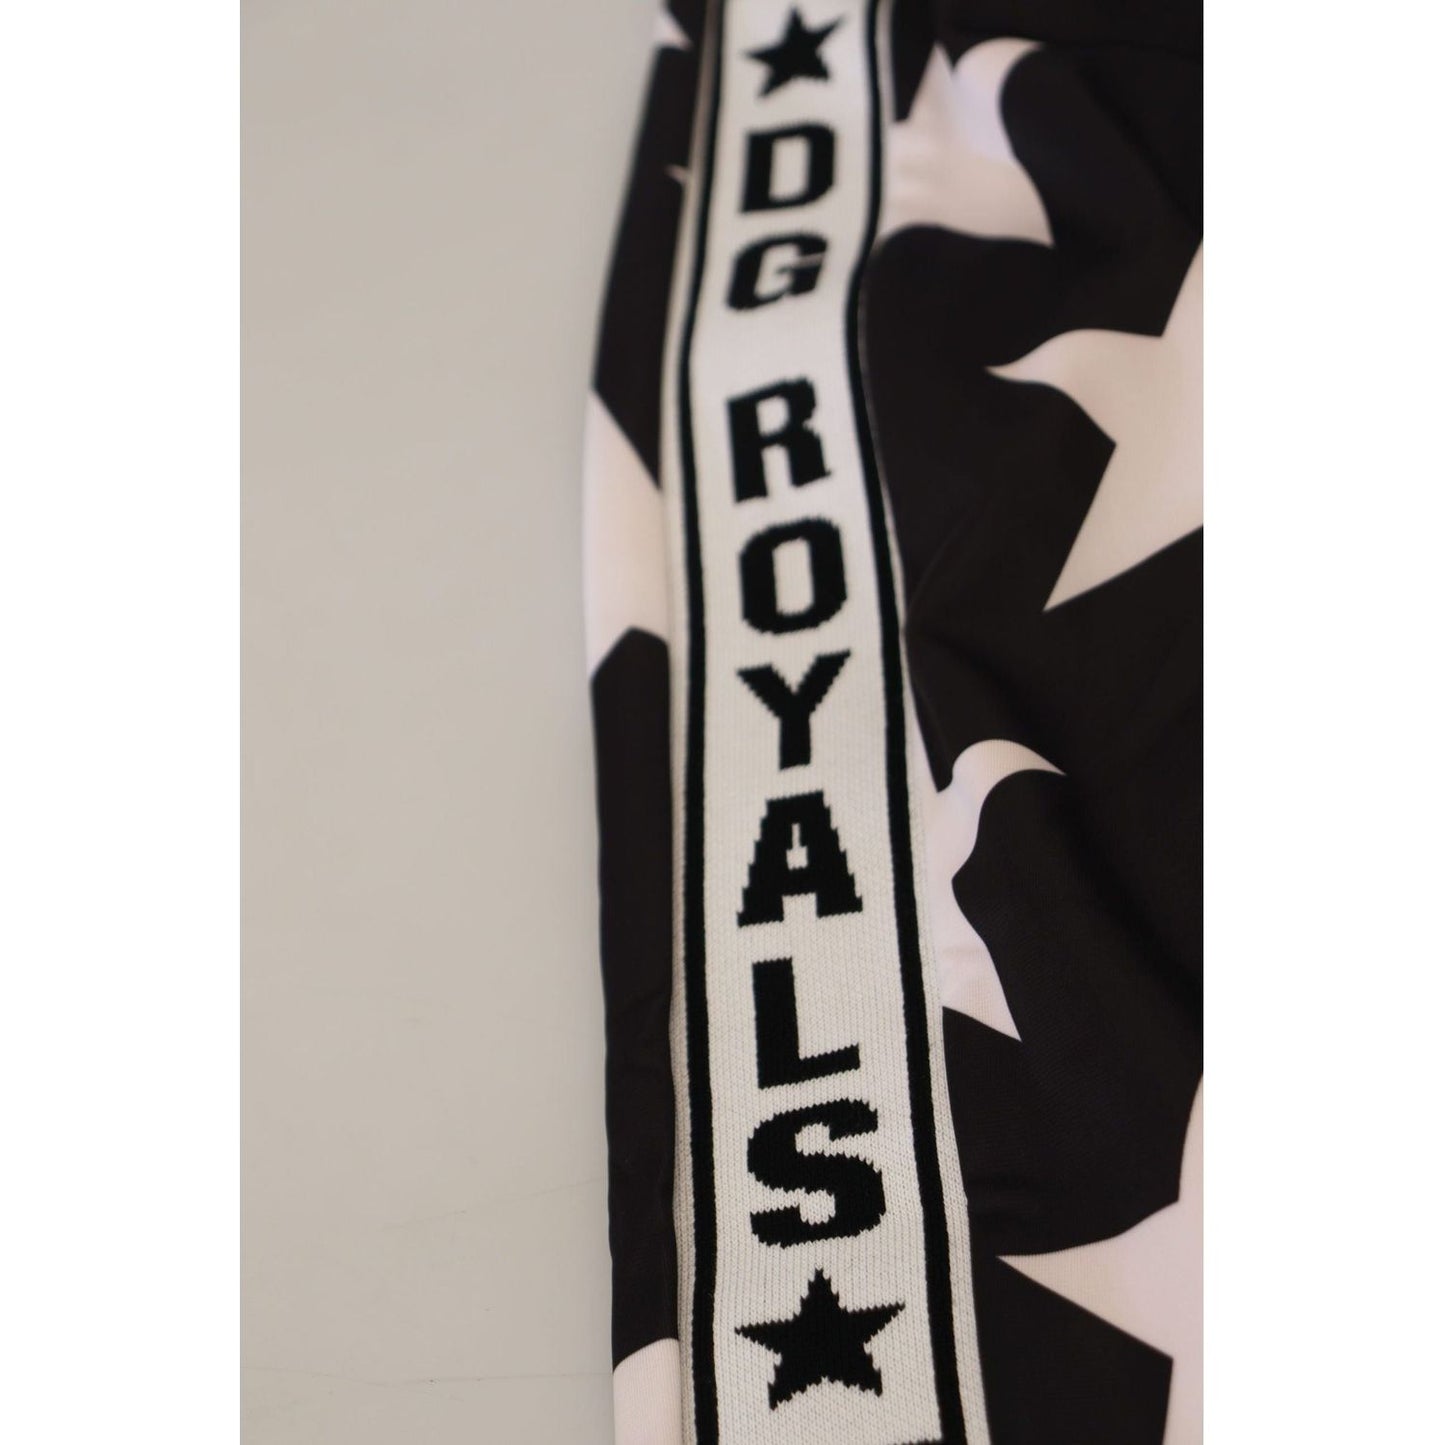 Dolce & Gabbana Star Print Casual Sweatpants with Logo Detail black-white-star-print-dg-royals-pants